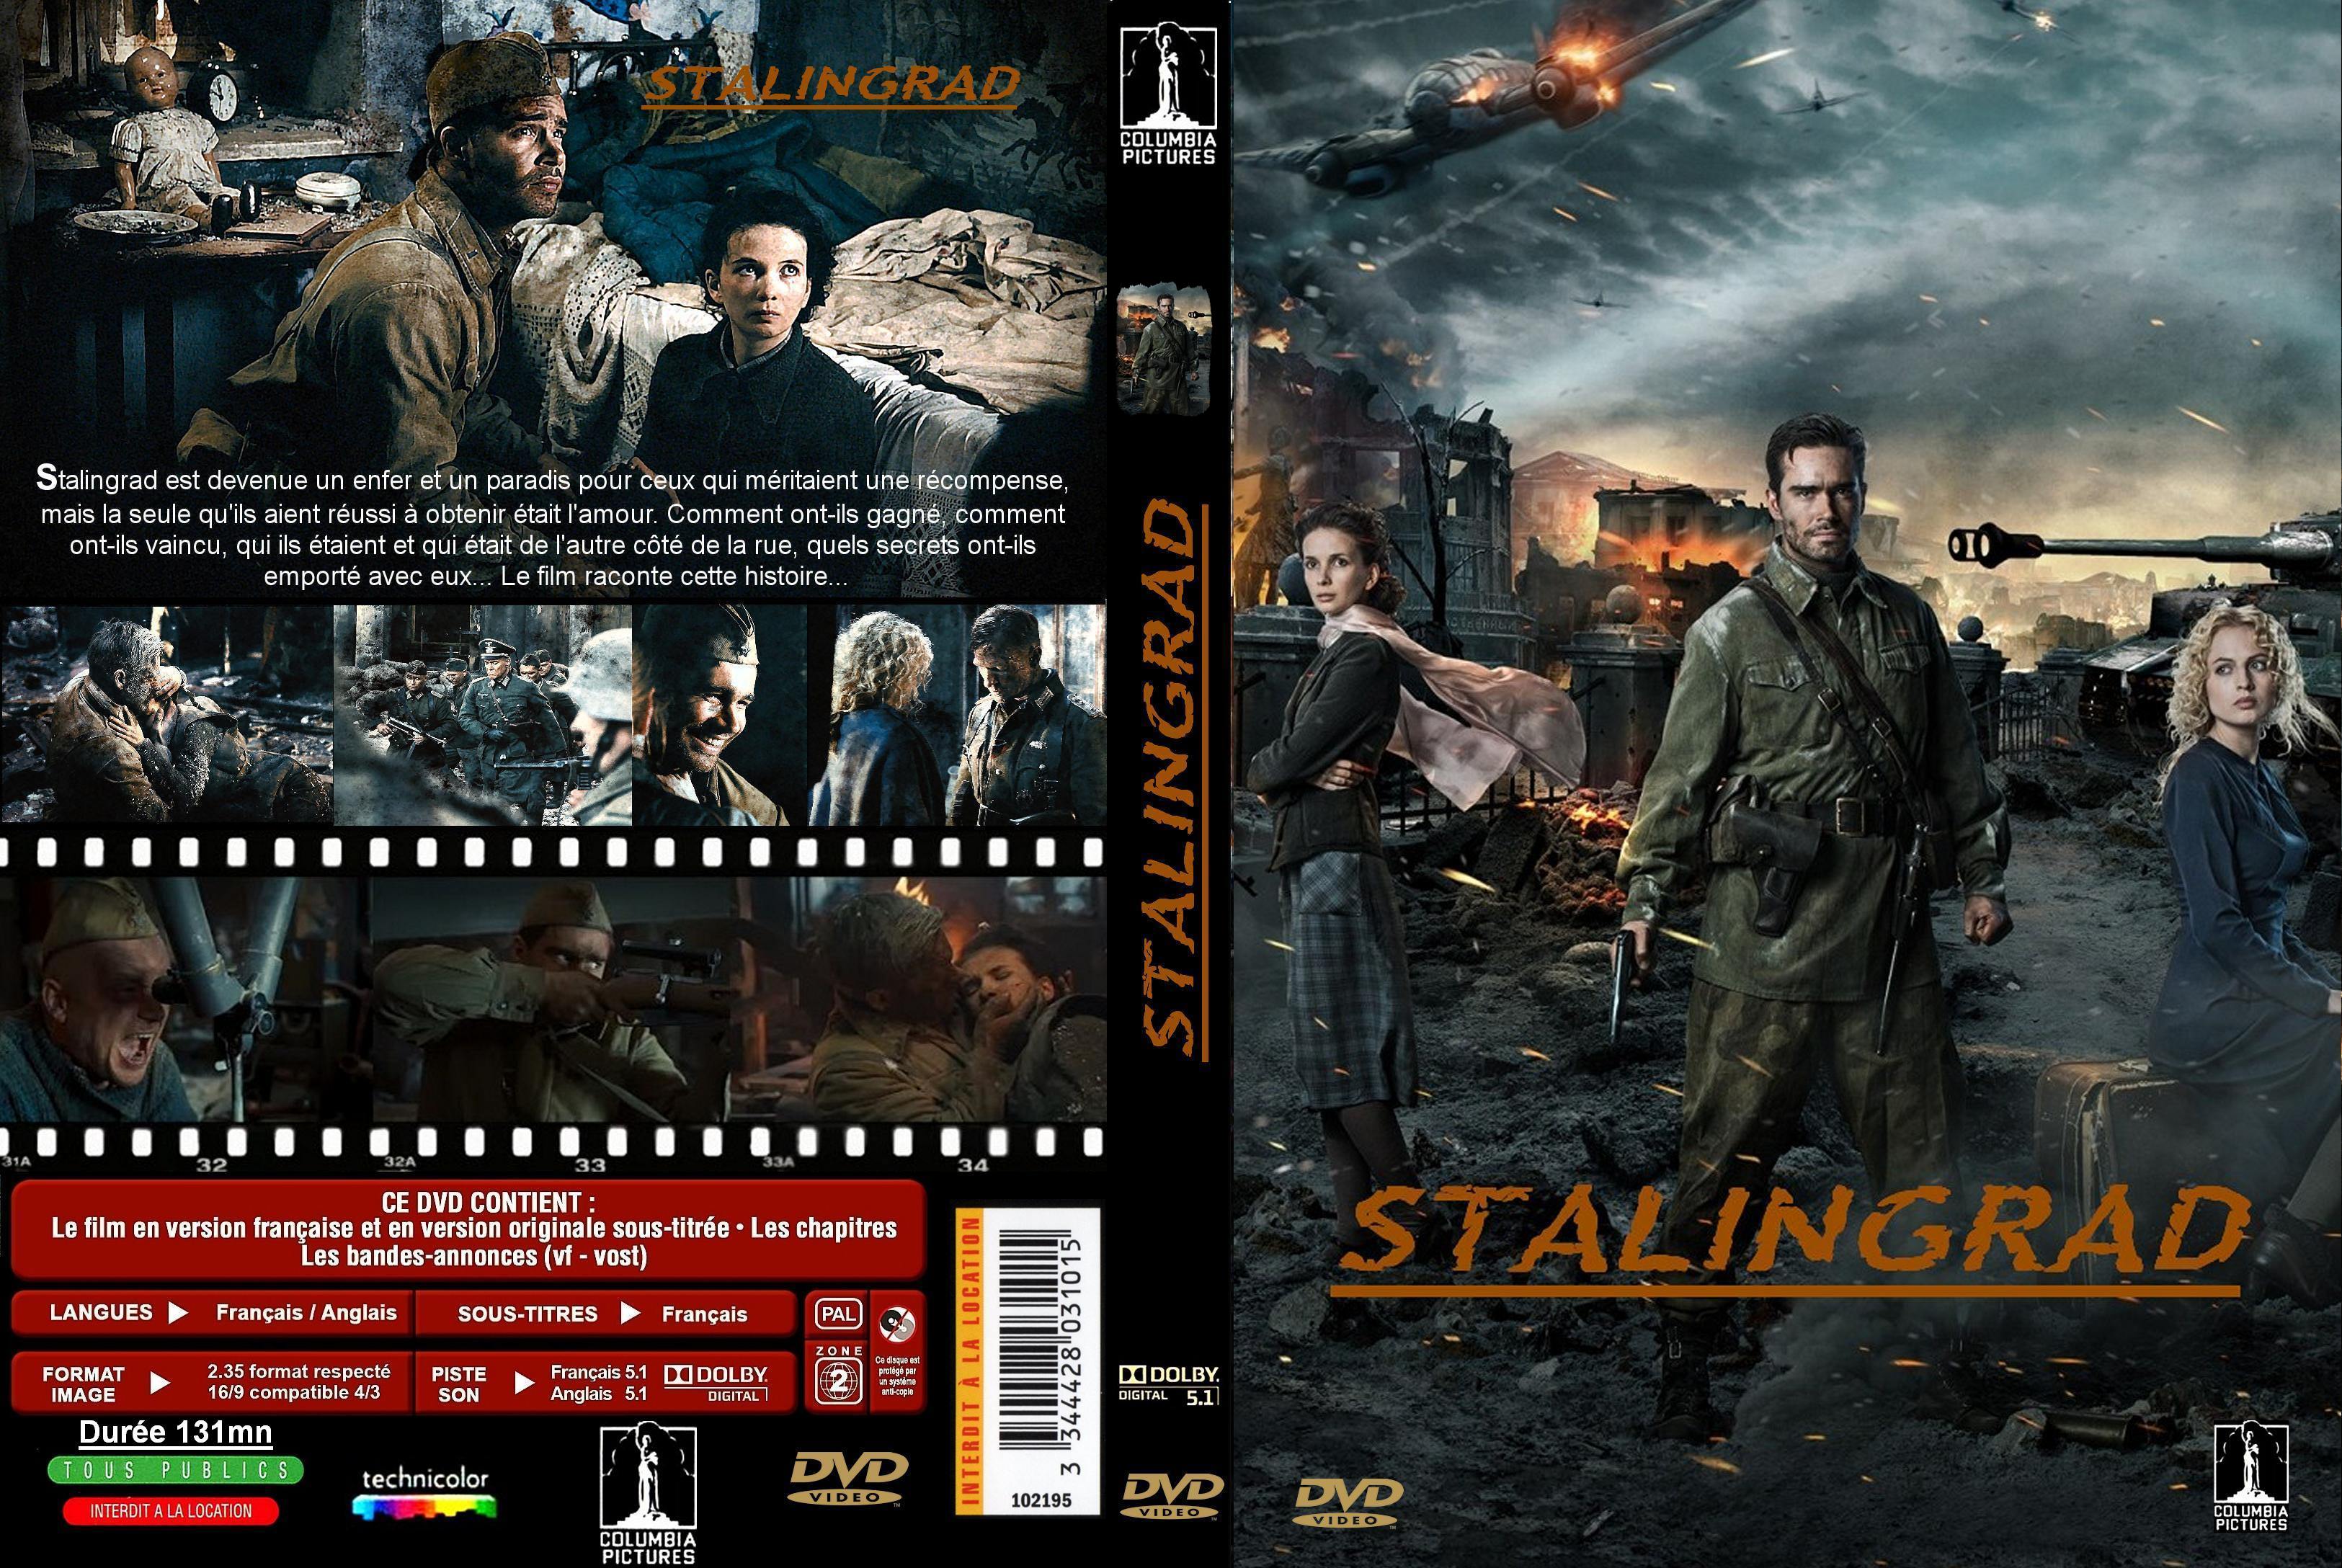 Jaquette DVD Stalingrad (2013) custom